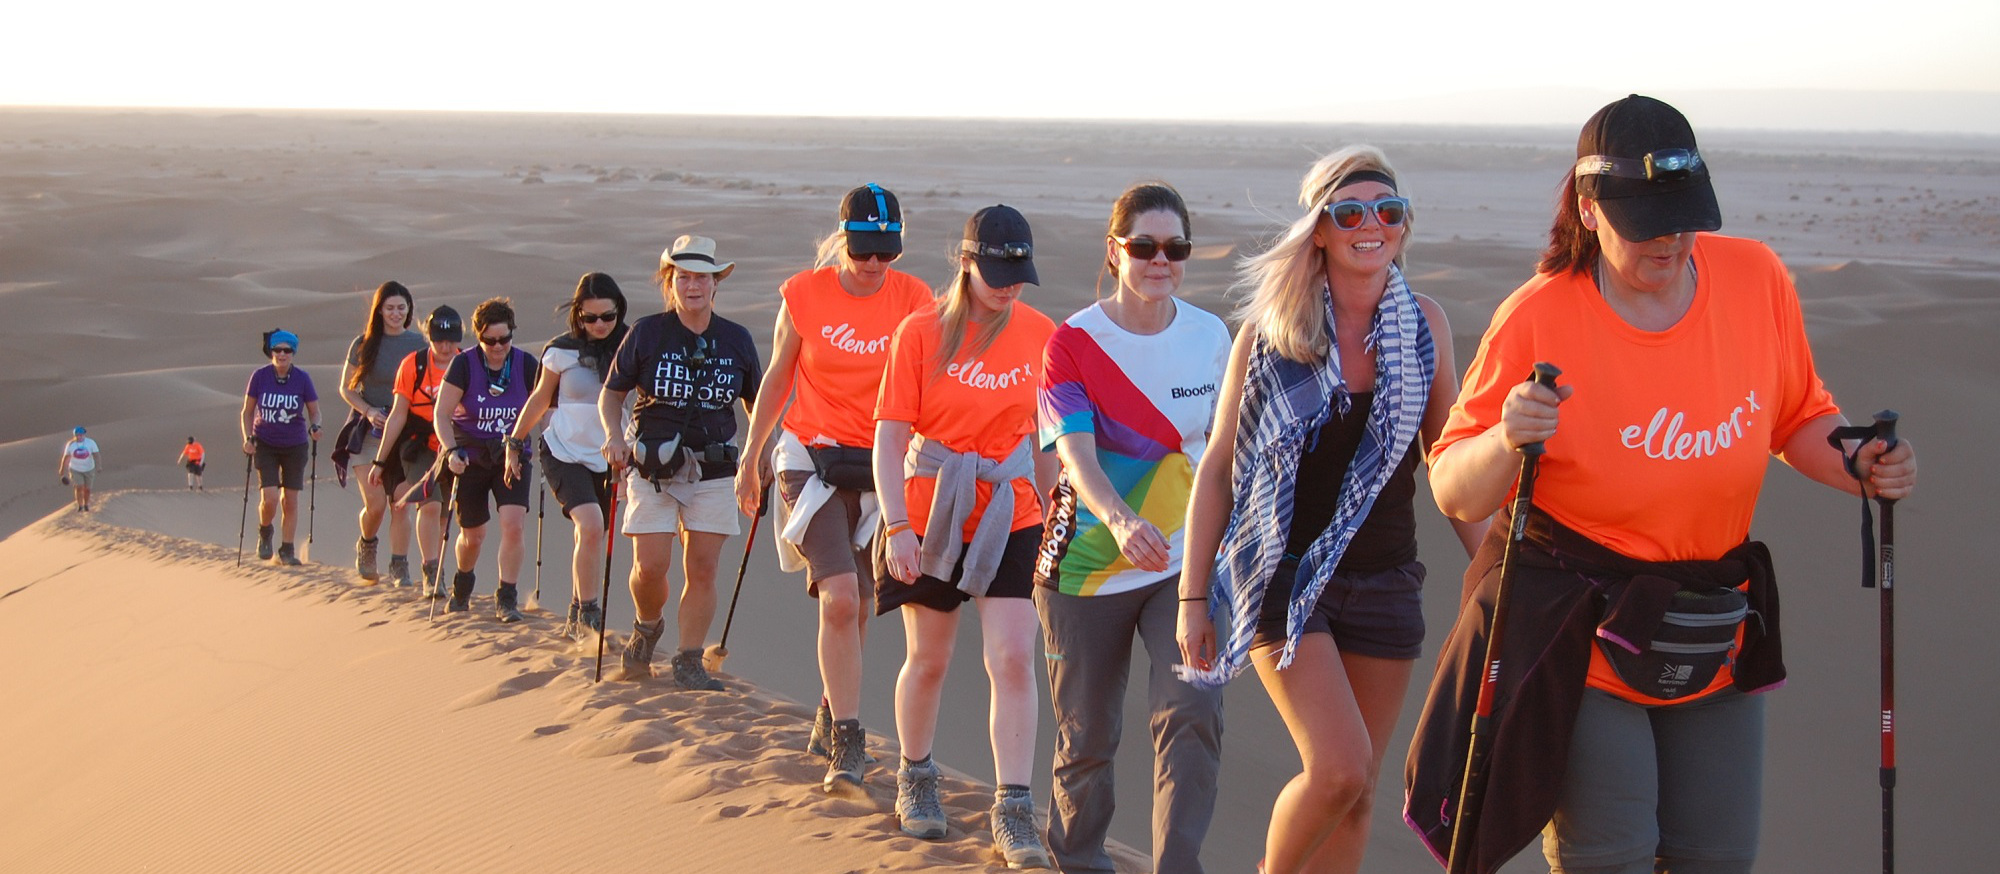 Why Sam trekked the Sahara for charity... 